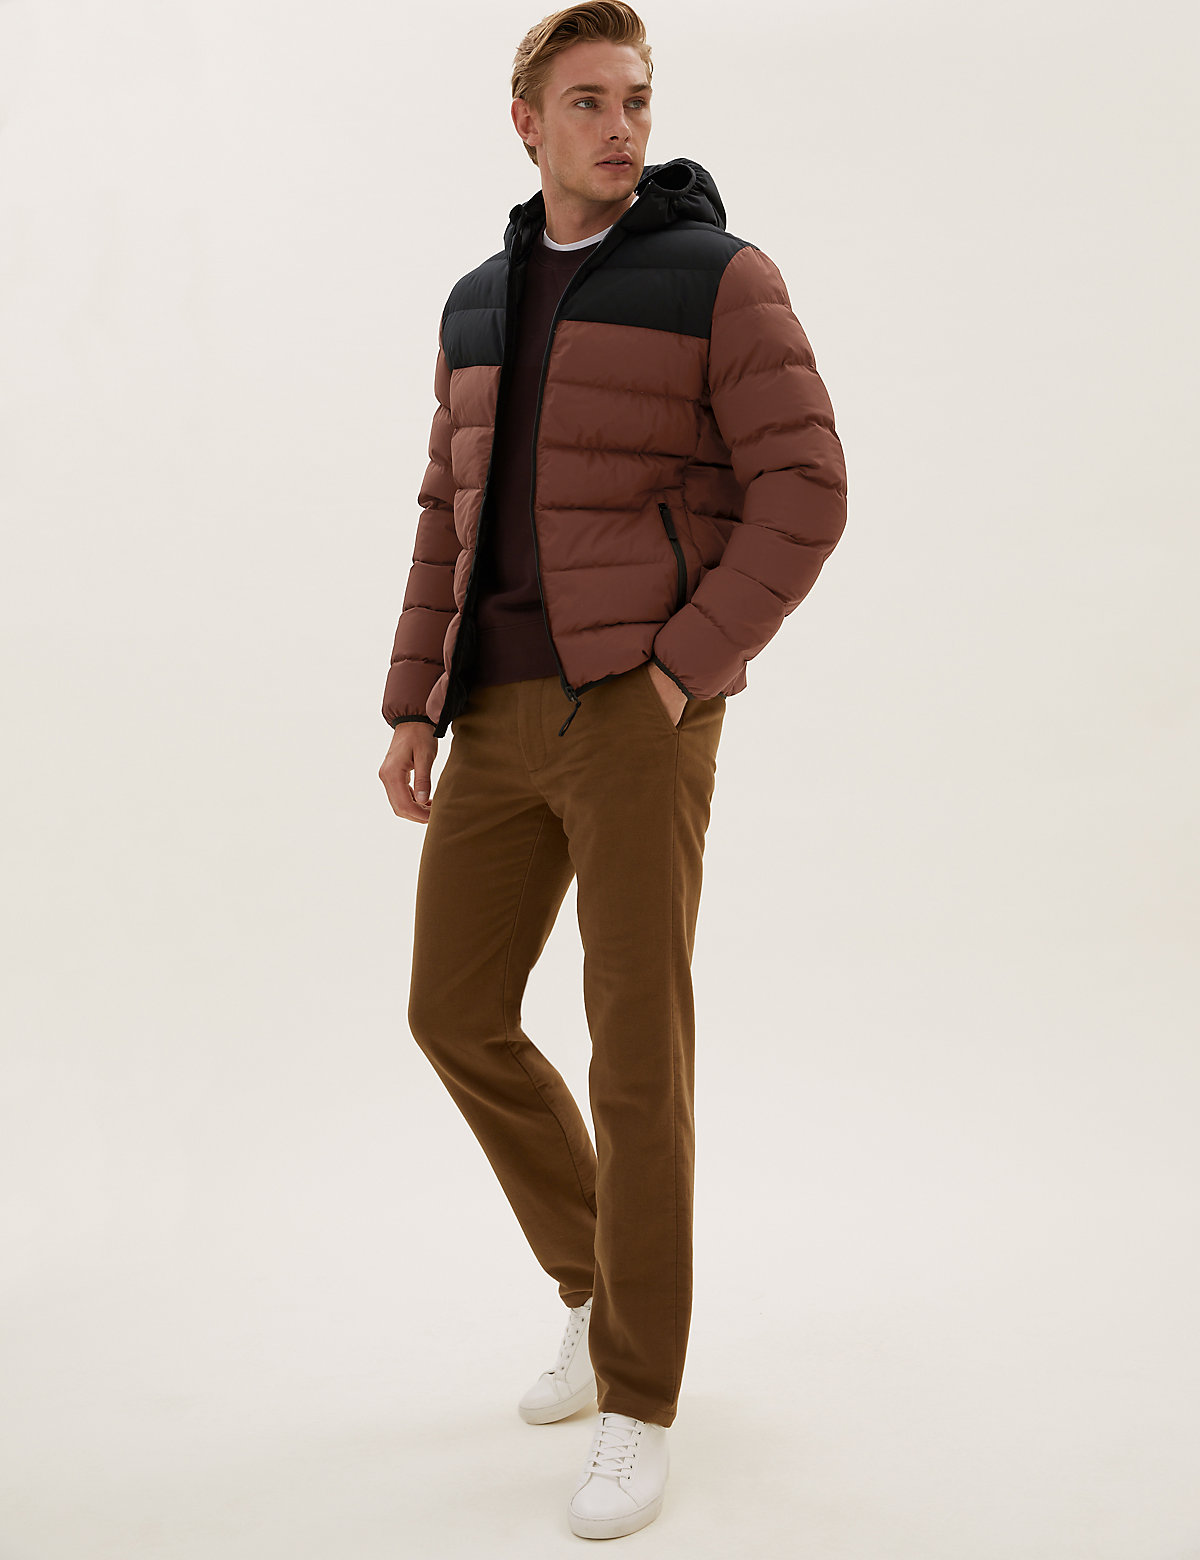 Мужская верхняя одежда Marks & Spencer Куртка утепленная с отделкой Stormwear™, Marks&Spencer